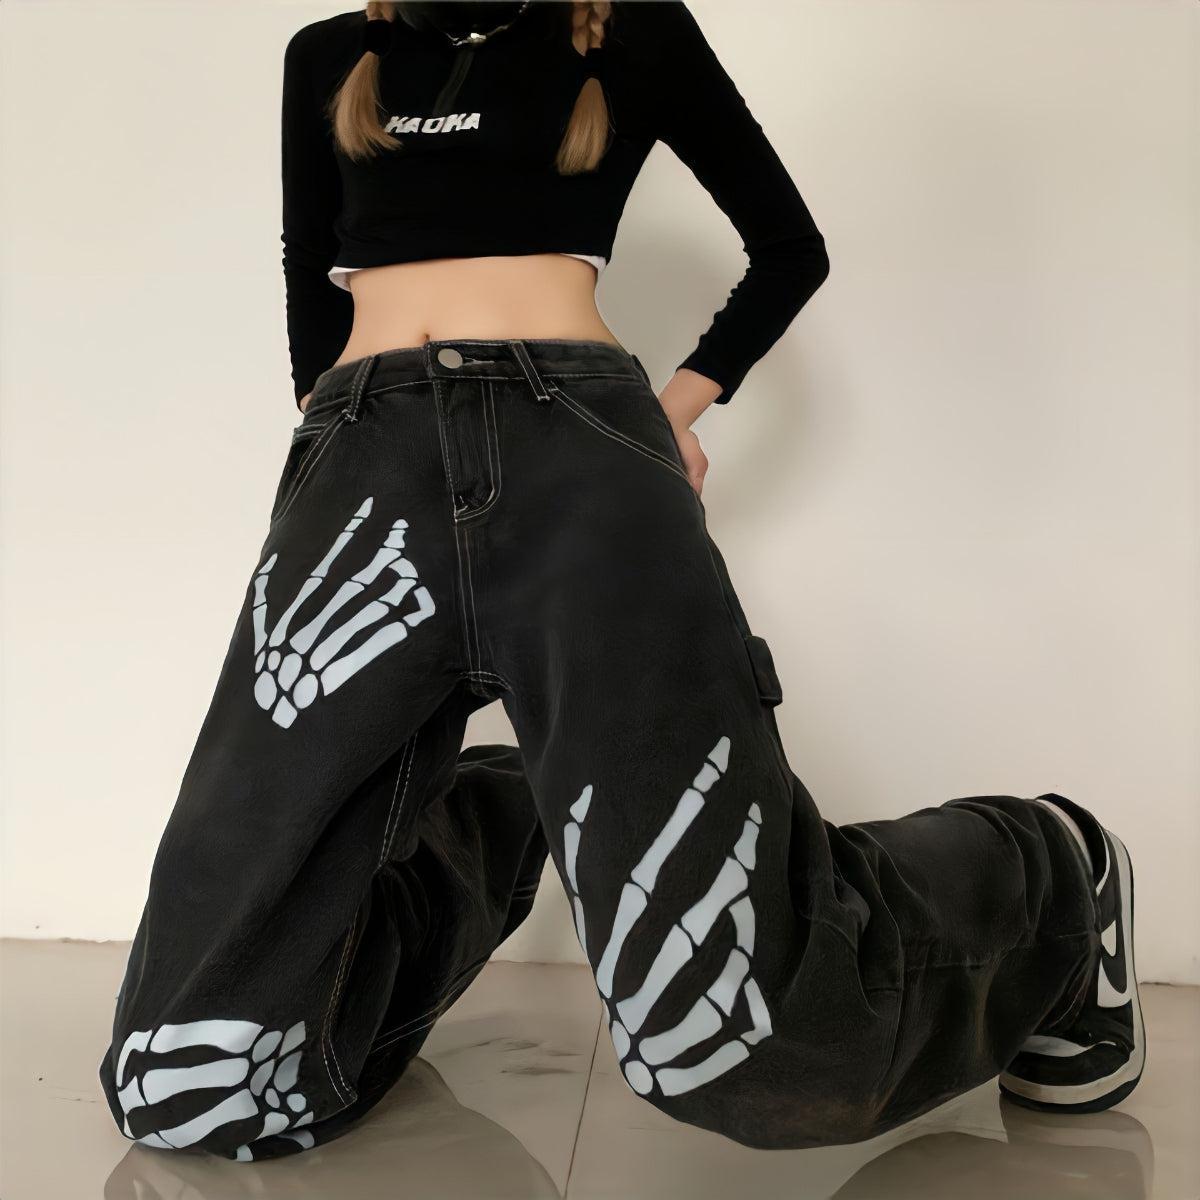 Grunge Skeleton Hand Printed Jeans